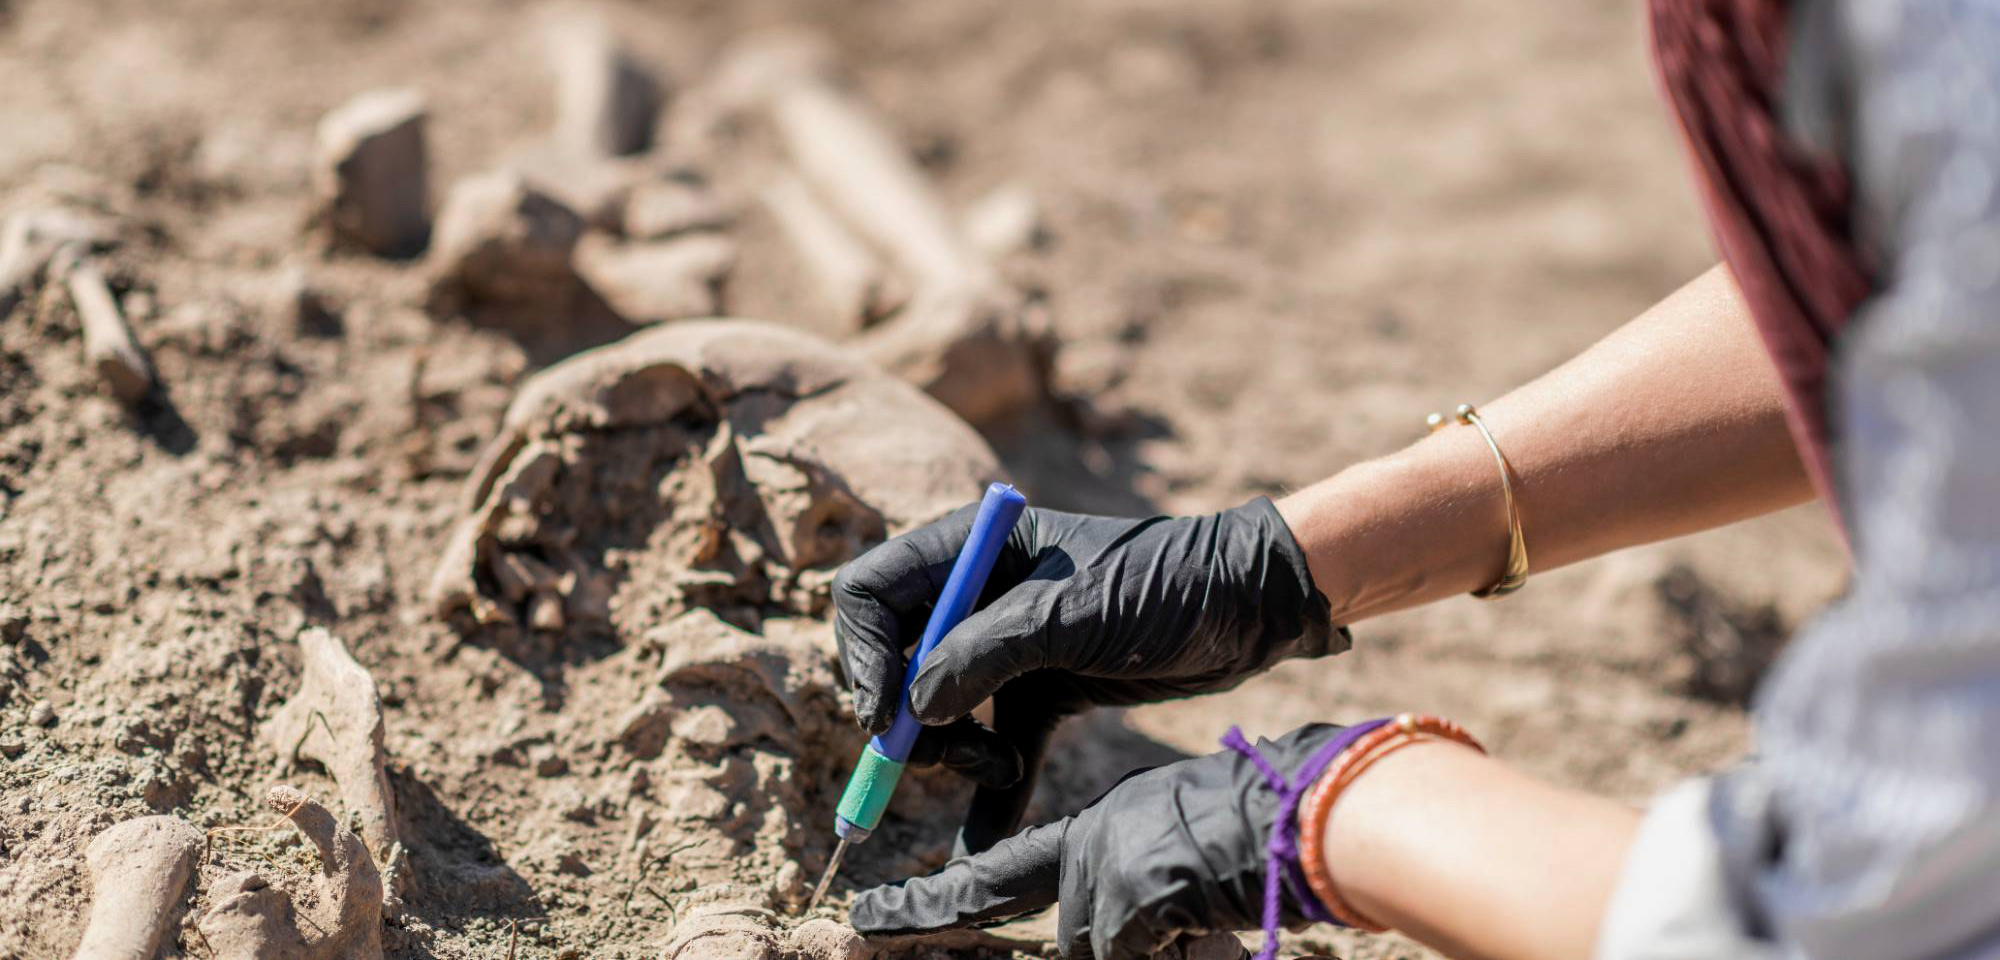 anthropologist digging artifacts